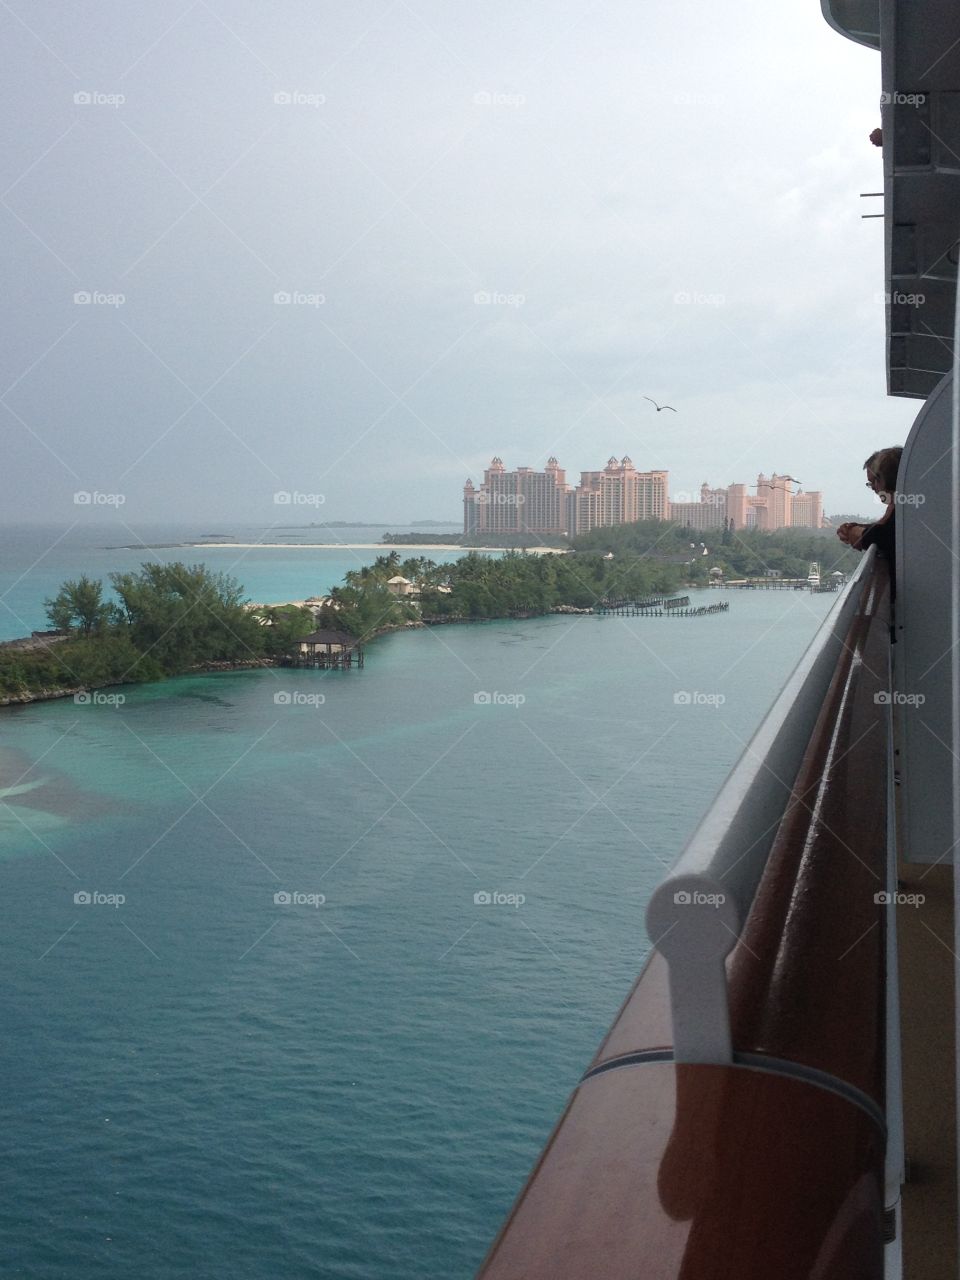 Cruise to the Bahamas! Taking a quick stop at Atlantis!